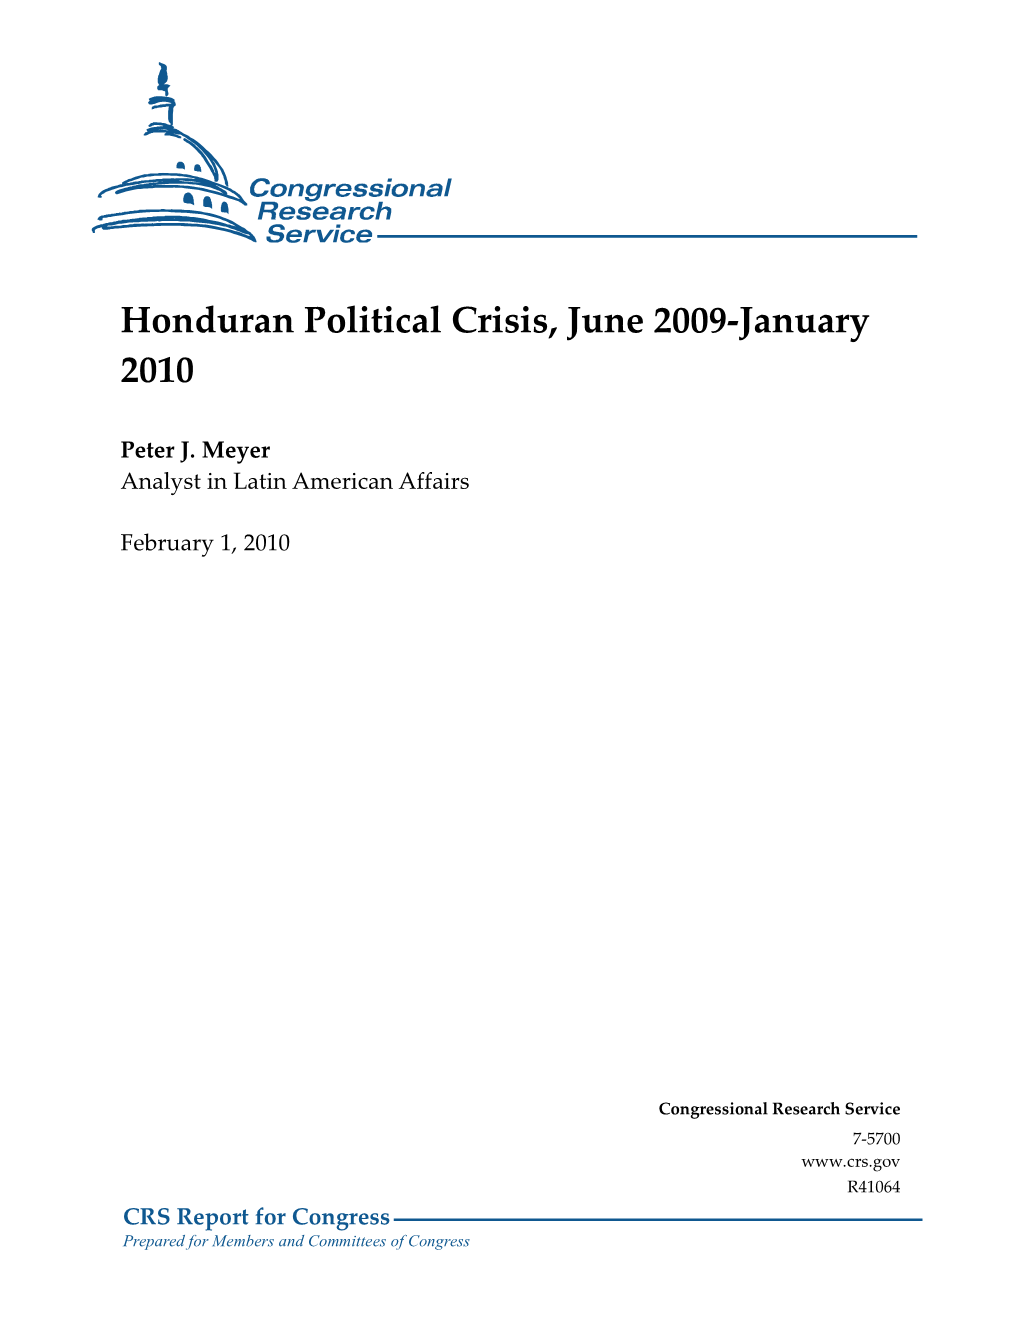 Honduran Political Crisis, June 2009-January 2010